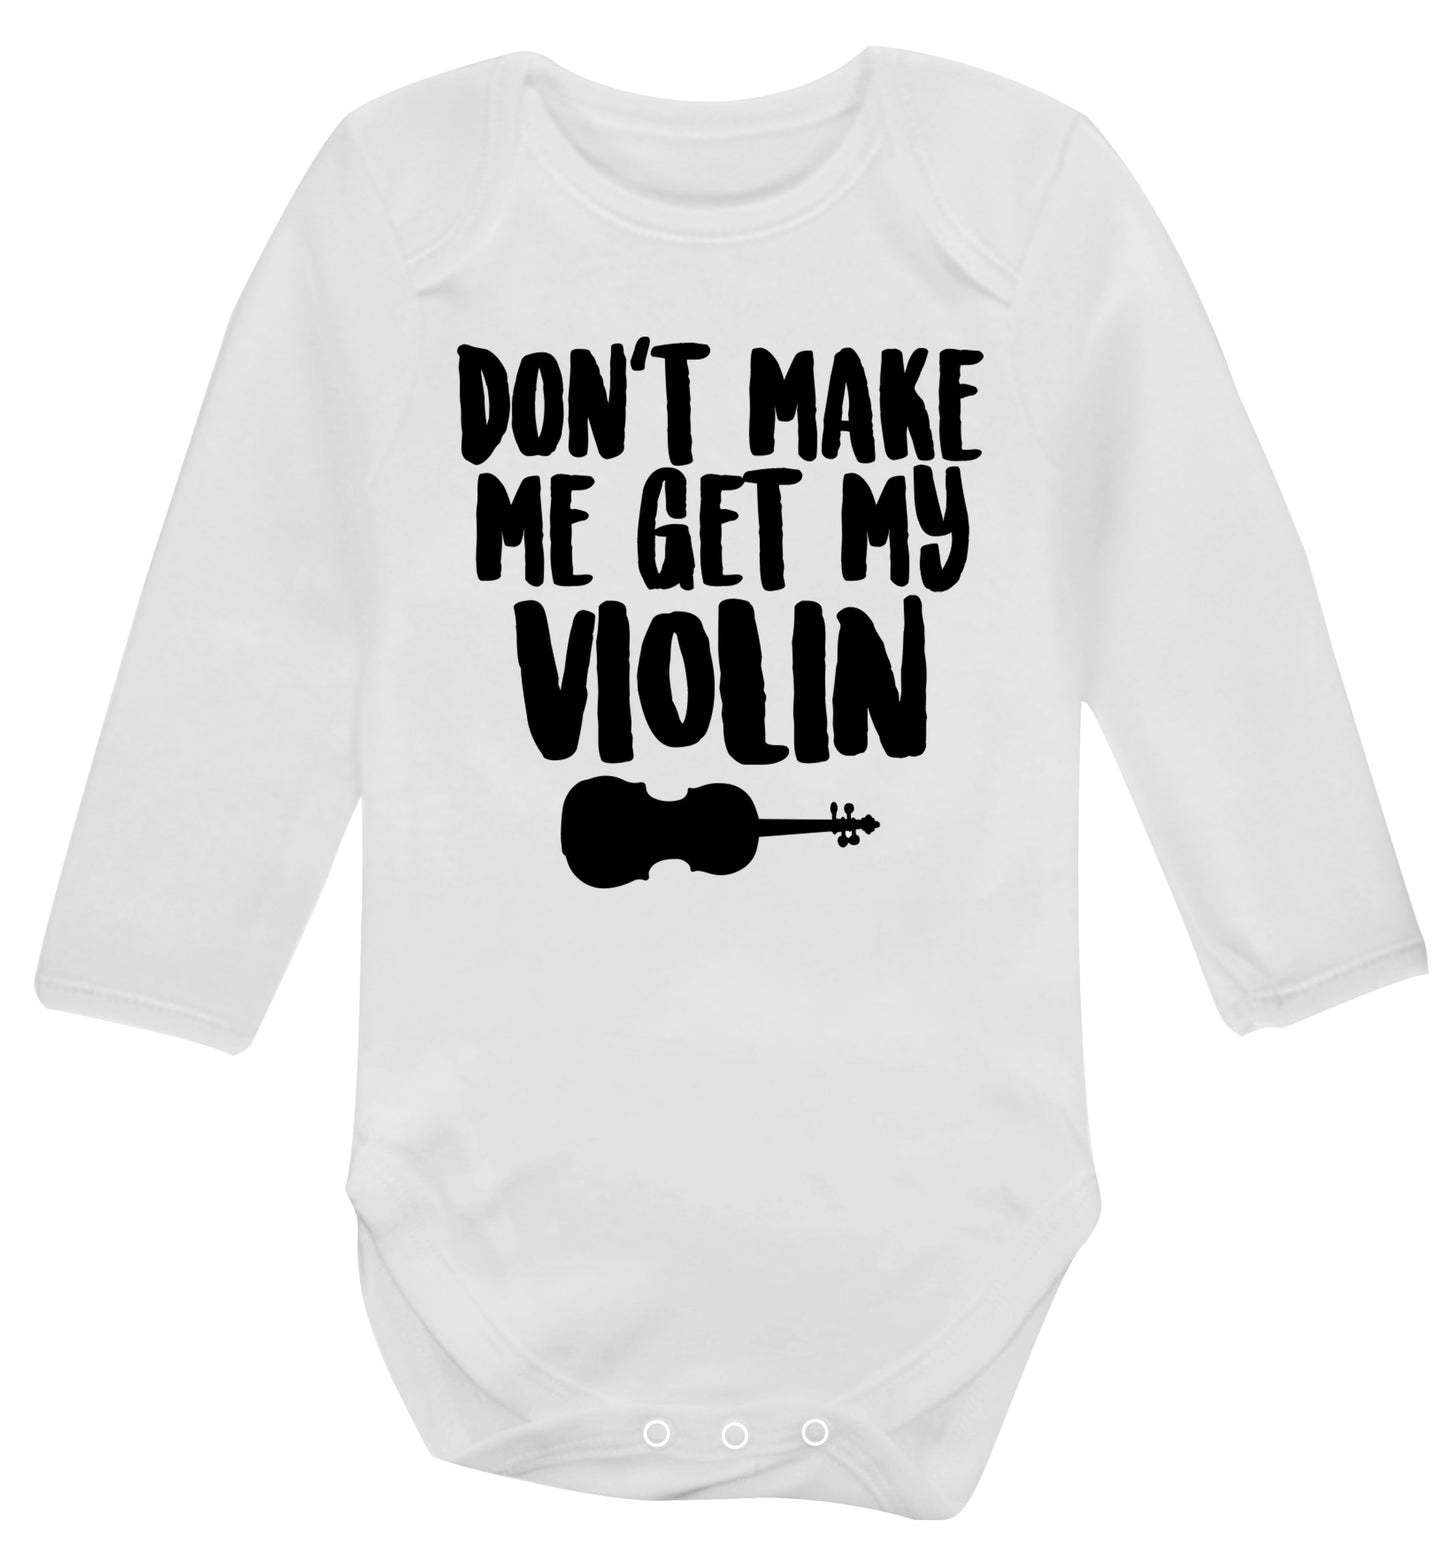 Don't make me get my violin Baby Vest long sleeved white 6-12 months